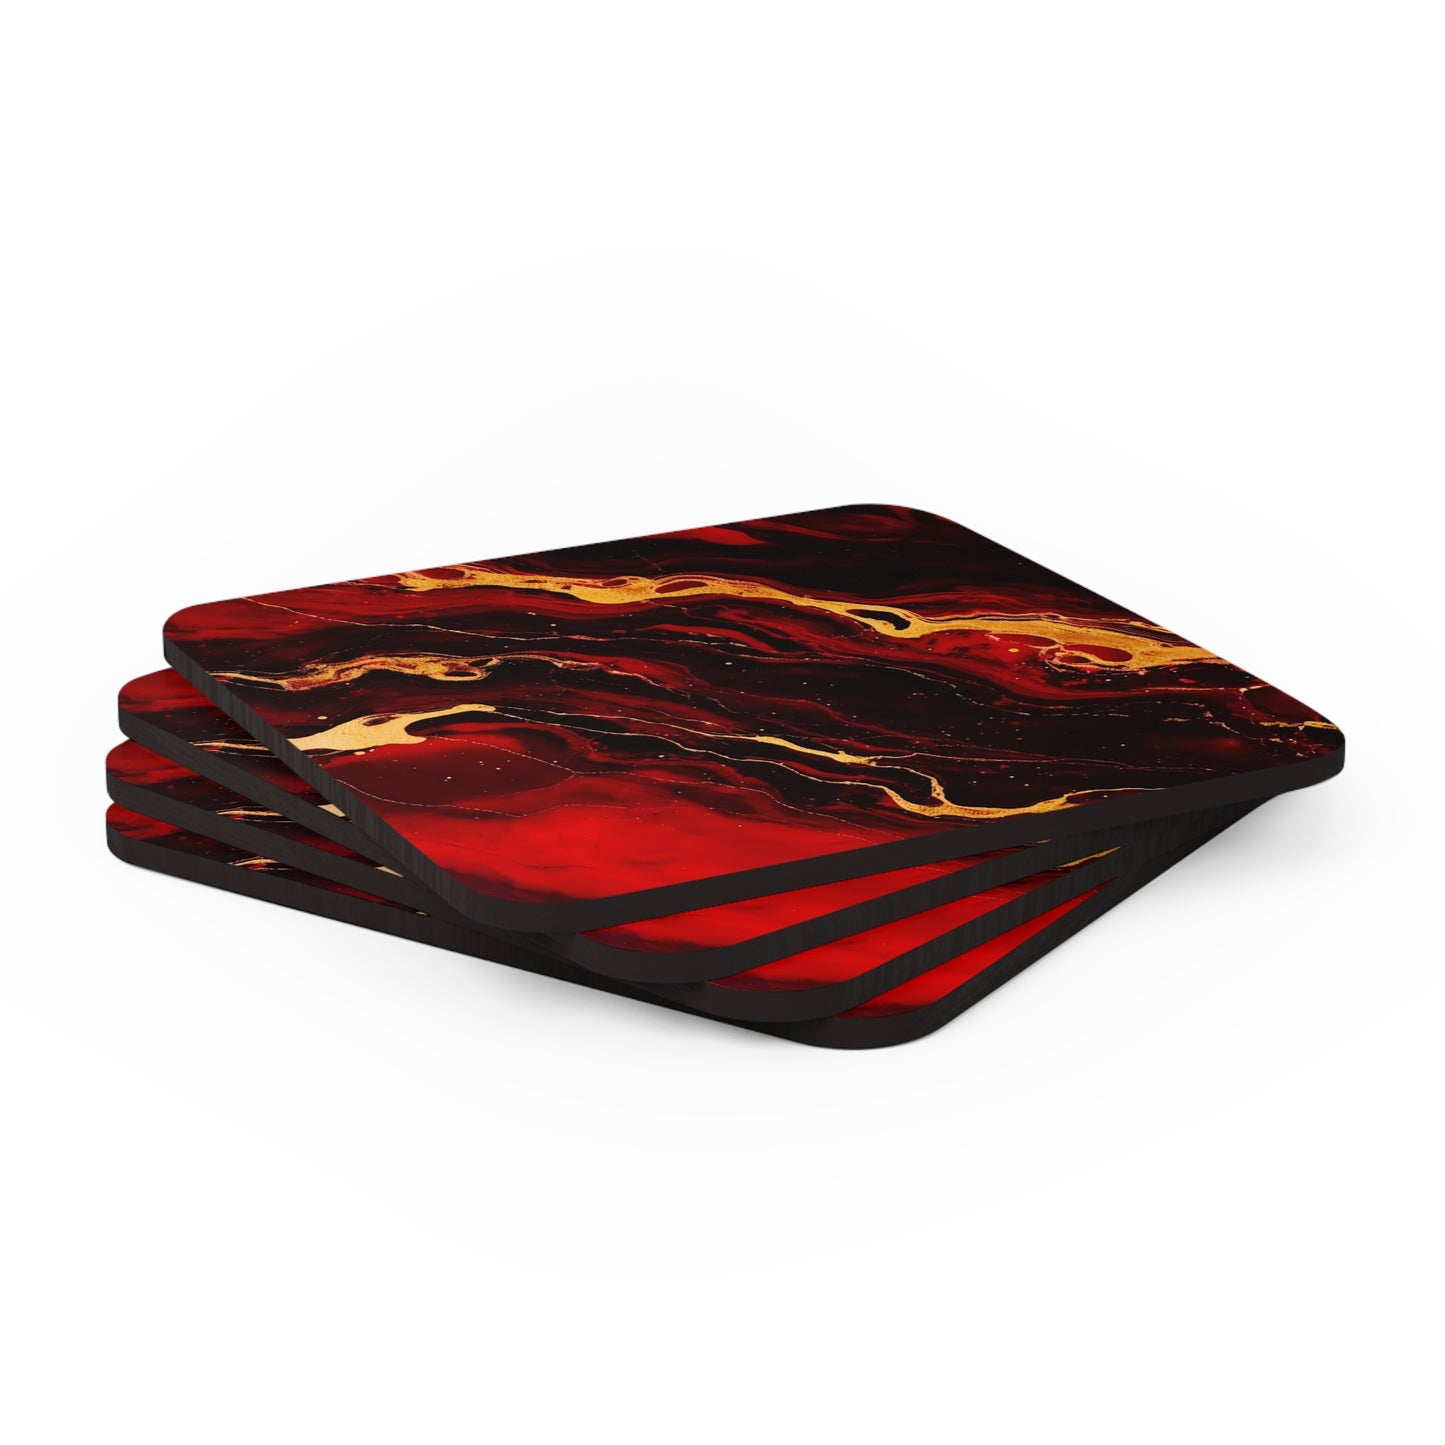 Crimson and Black Geode | Set of 4 Coasters